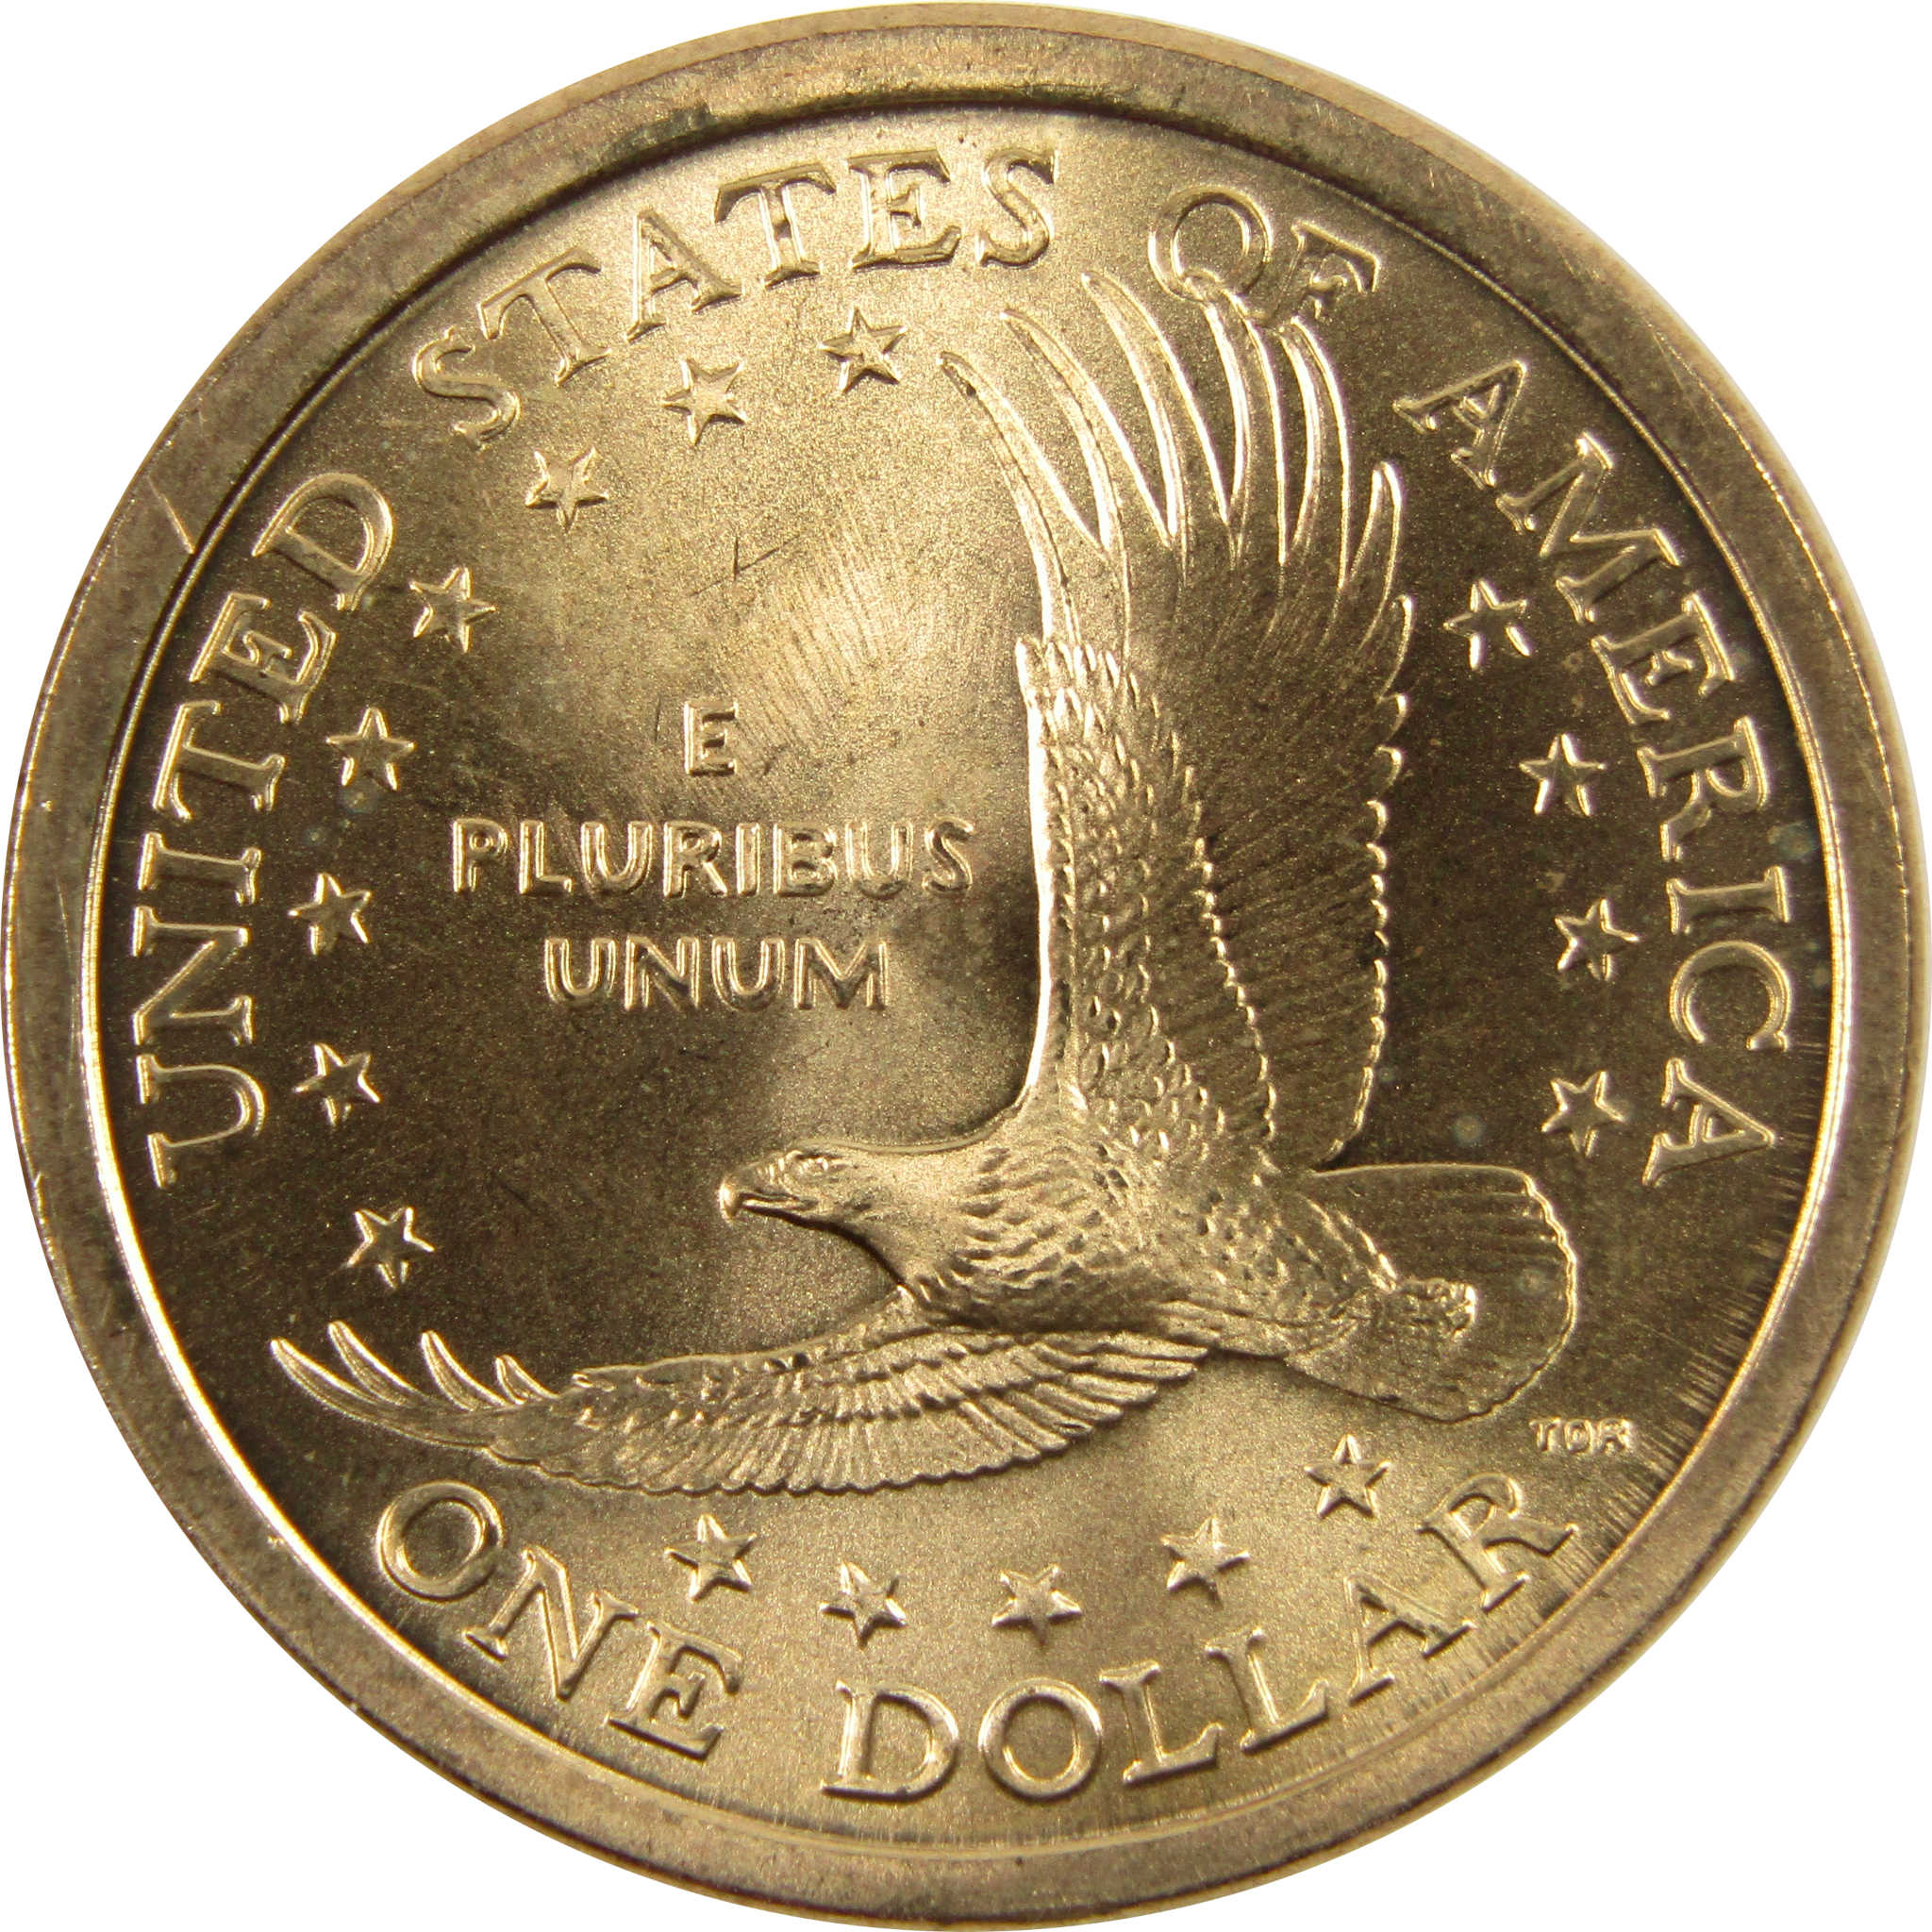 2007 P Sacagawea Native American Dollar BU Uncirculated $1 Coin